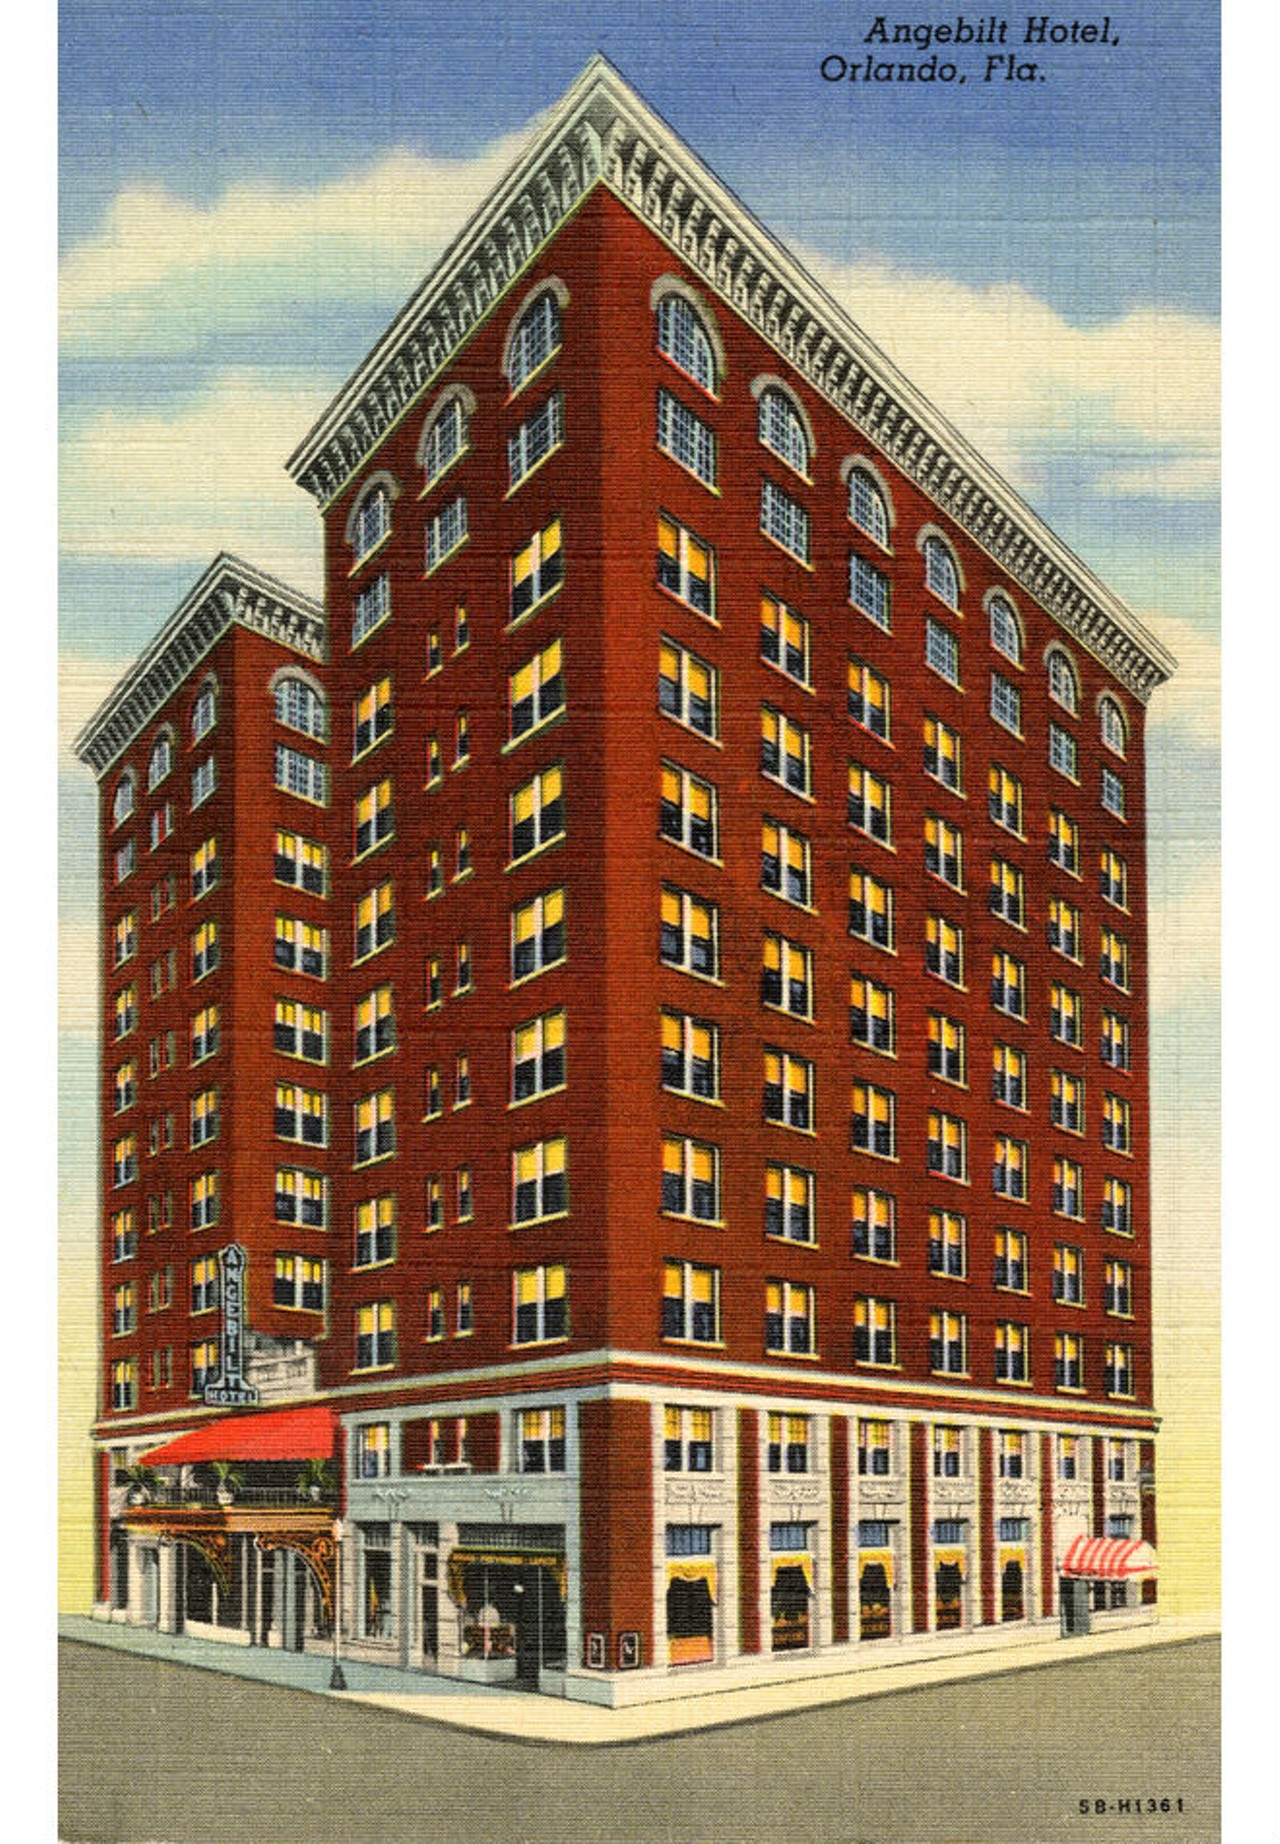 The Angebilt Hotel on Orange Avenue